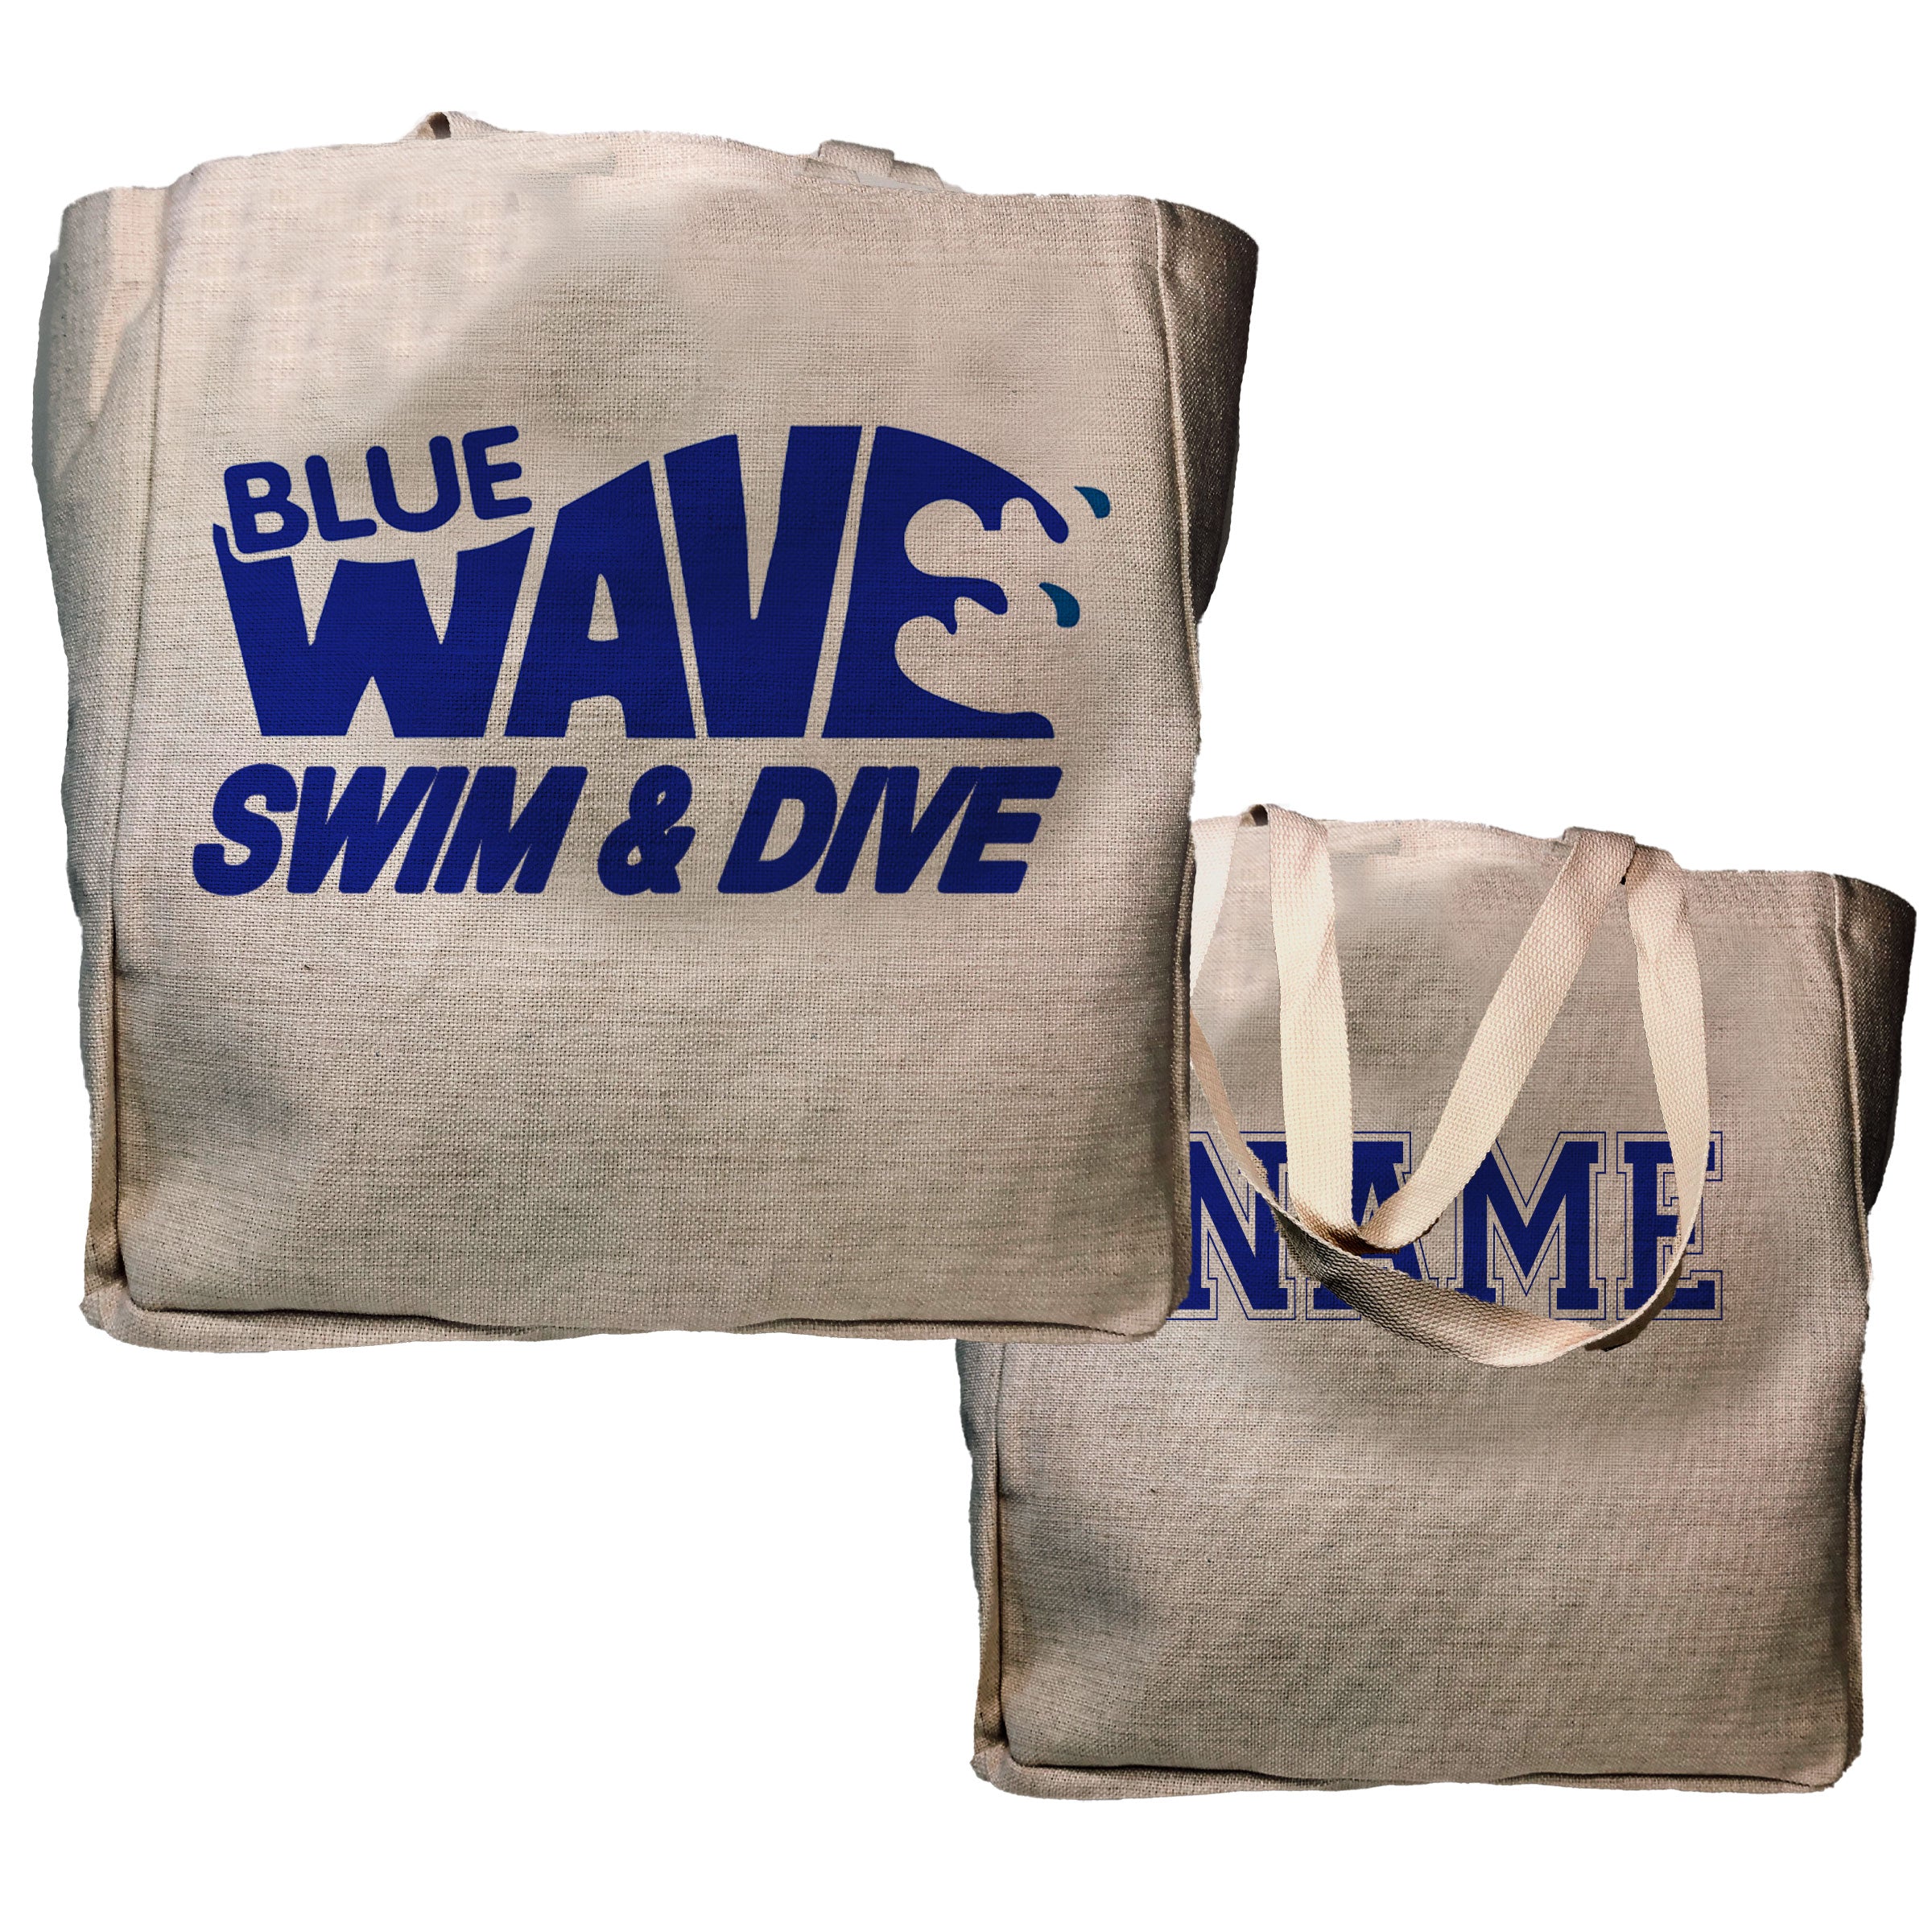 Blue Wave Swim & Dive Tote - Name